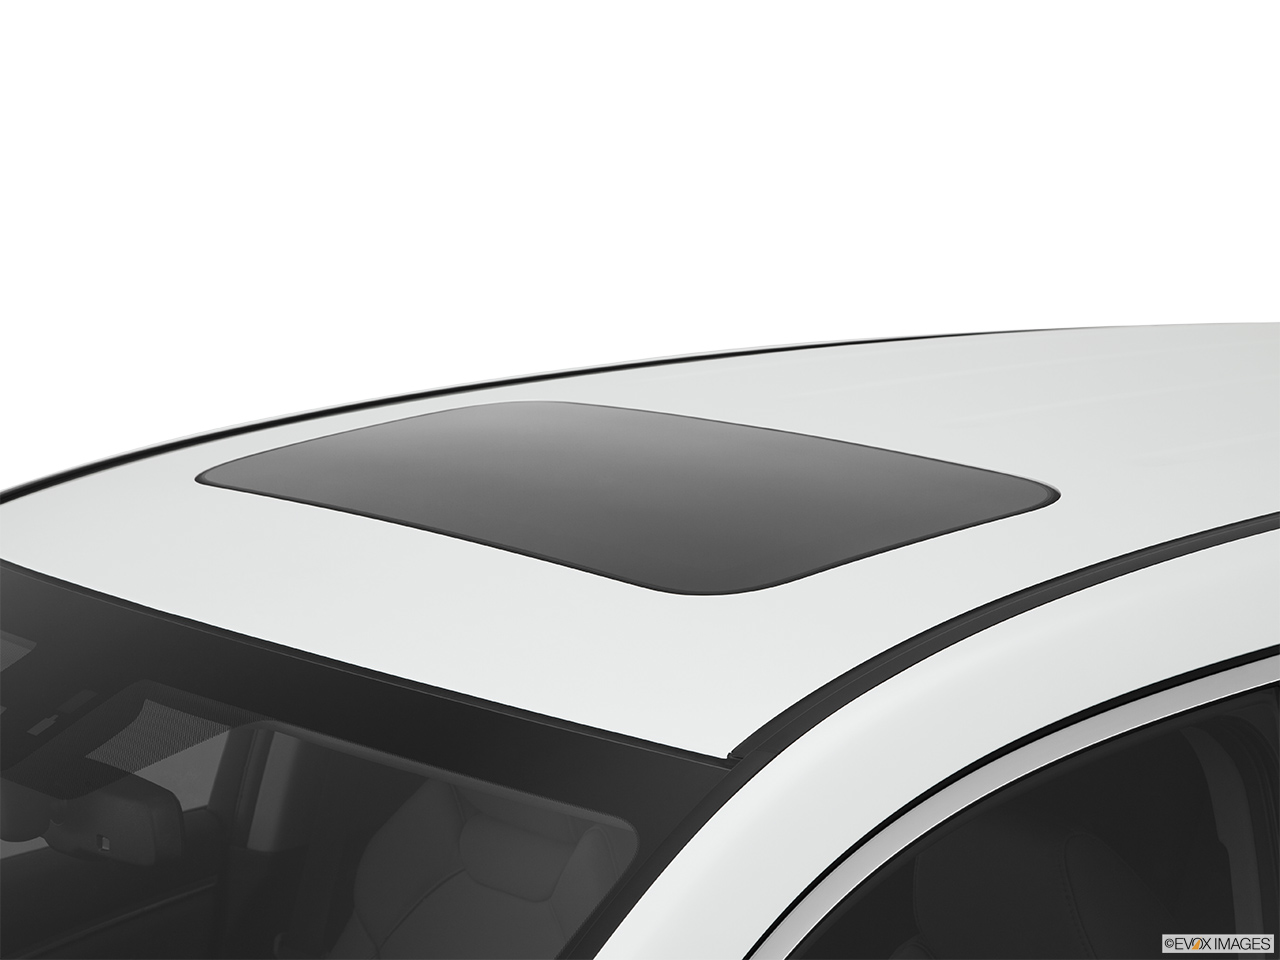 2014 Acura MDX SH-AWD Sunroof/moonroof. 